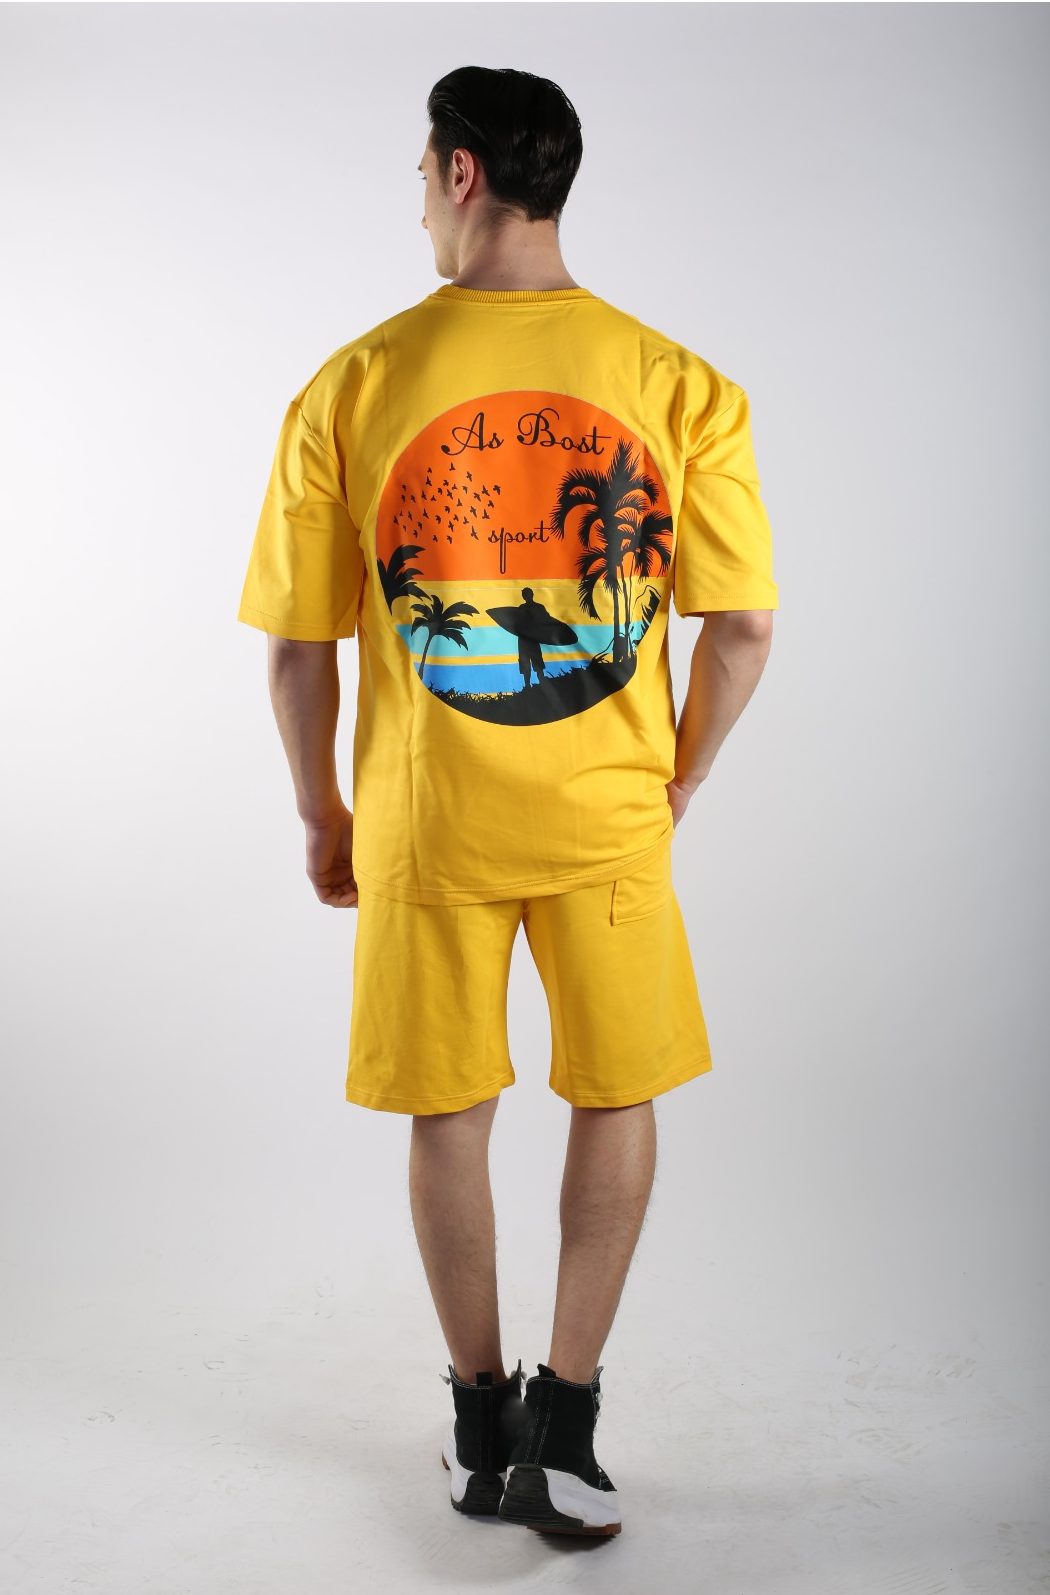 ALGINOO T-Shirt & + Short) & (Set, T-Shirt Shorts Shorts Gelb T-Shirt